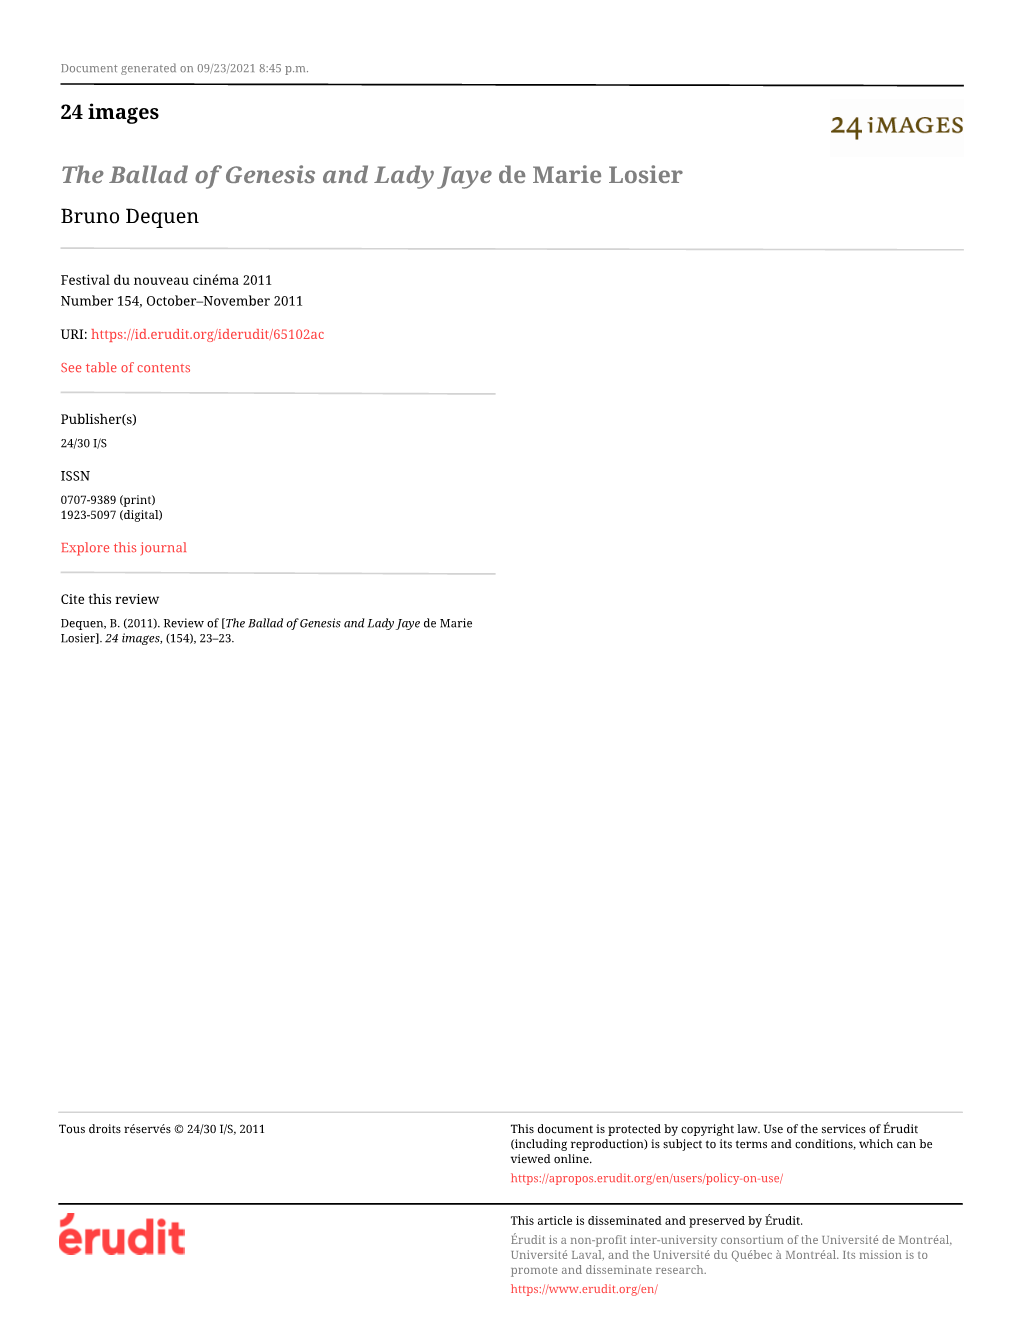 The Ballad of Genesis and Lady Jaye De Marie Losier Bruno Dequen